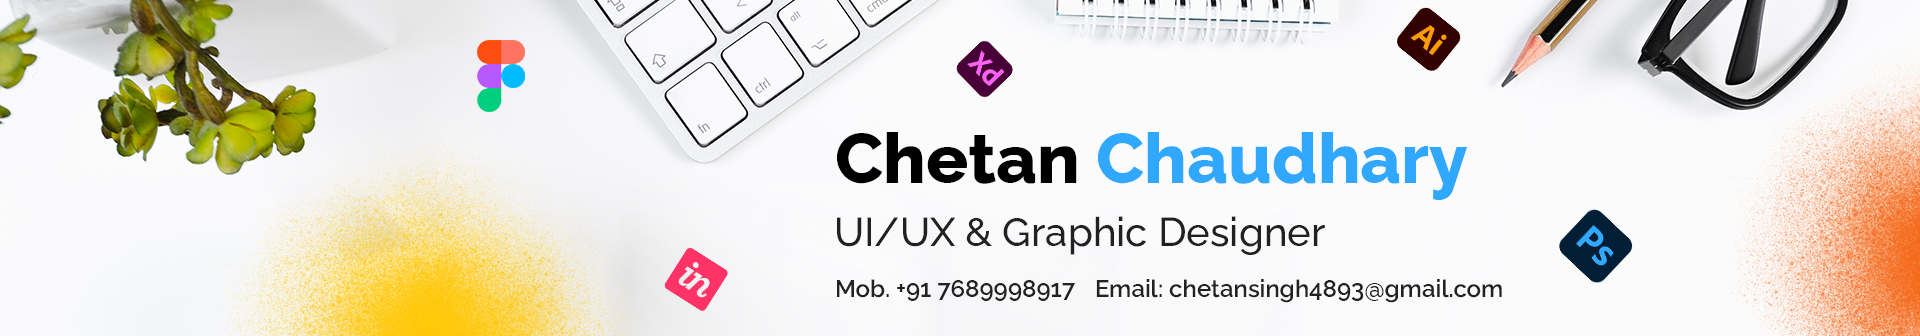 Chetan Chaudhary's profile banner